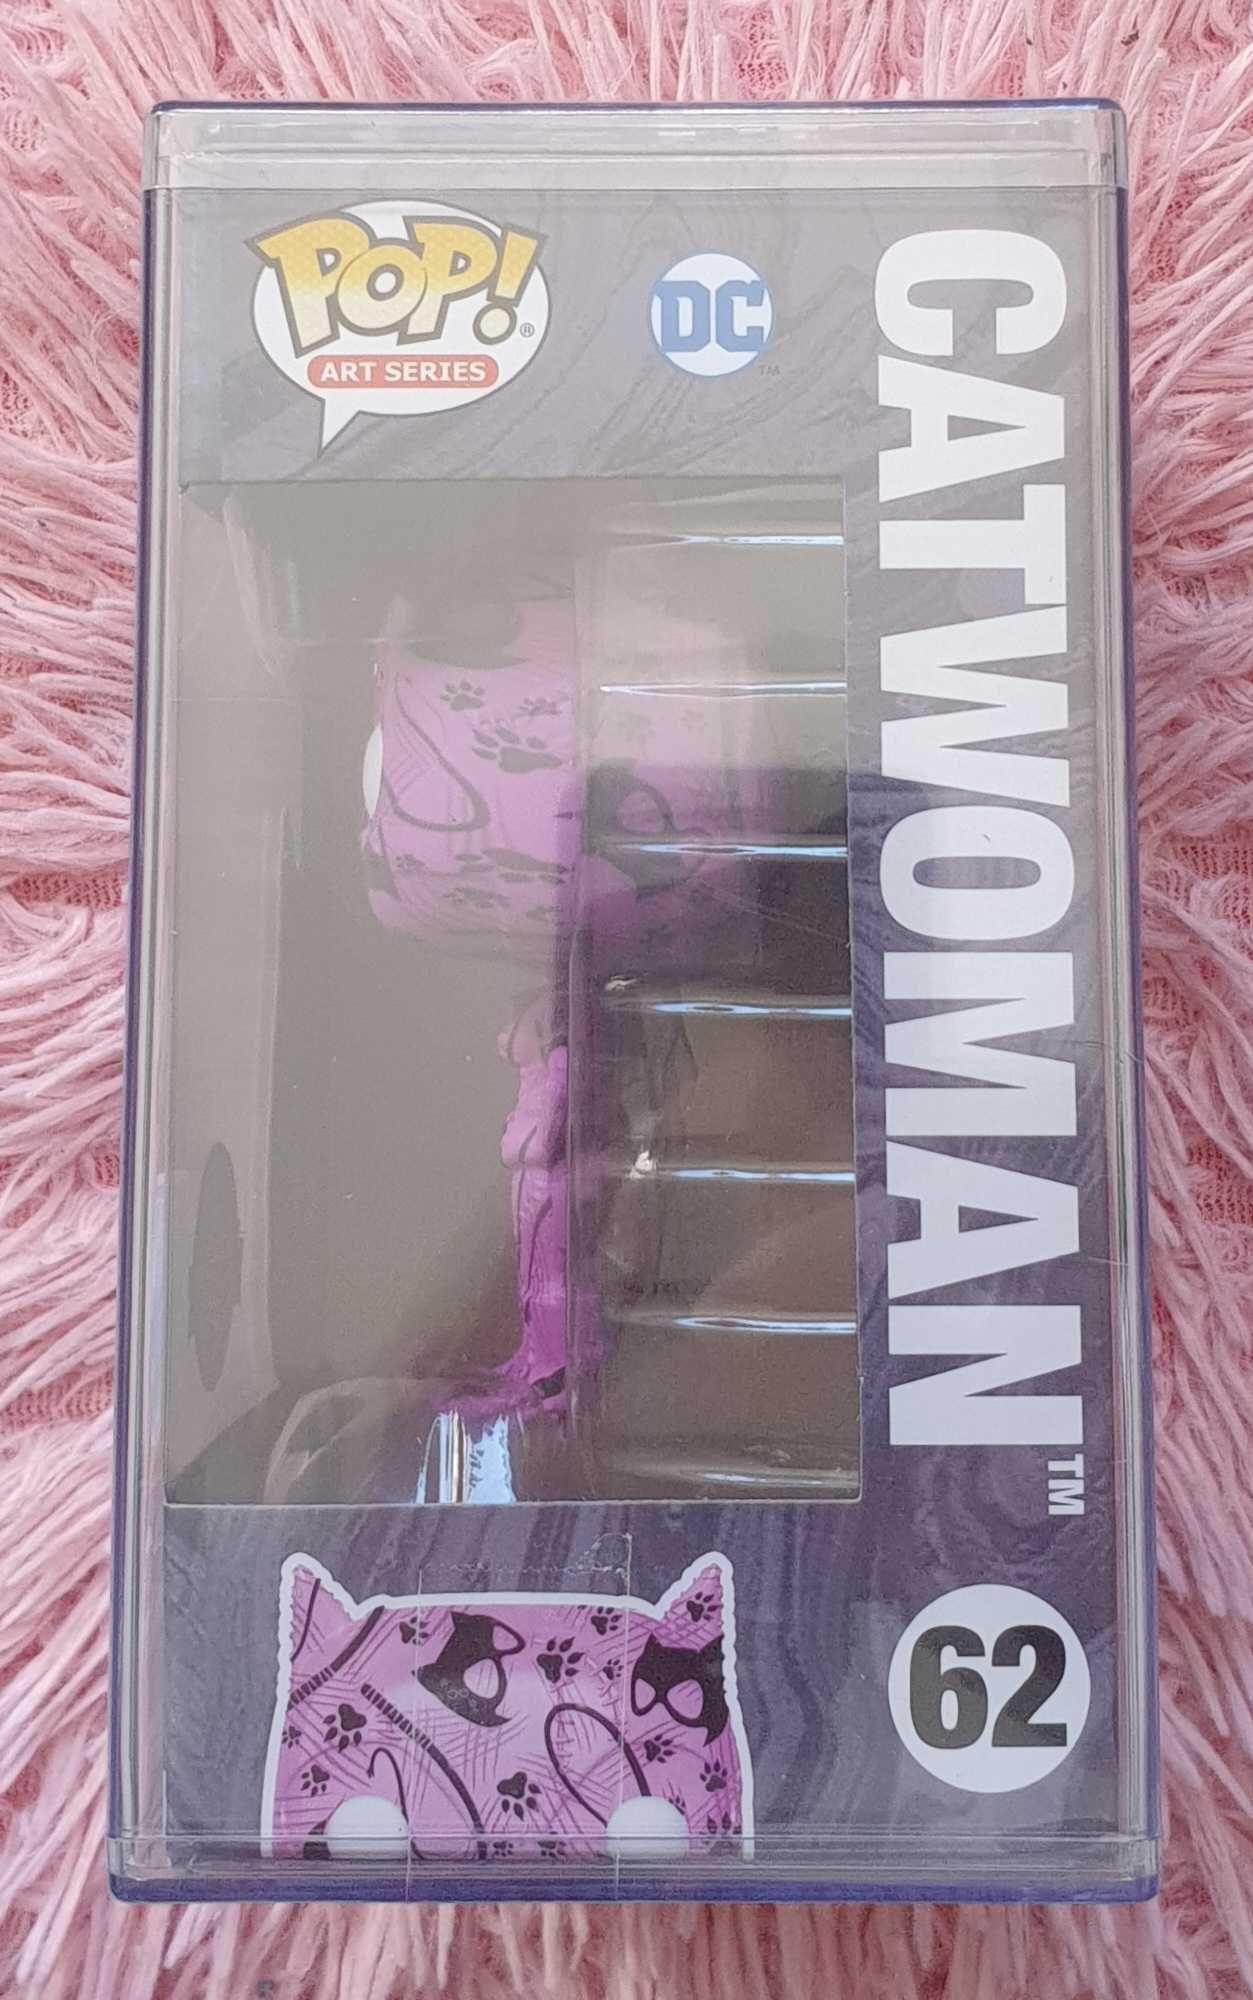 Figurka Funko POP! Catwoman Batman Returns | SPECIAL ART SERIES | #62